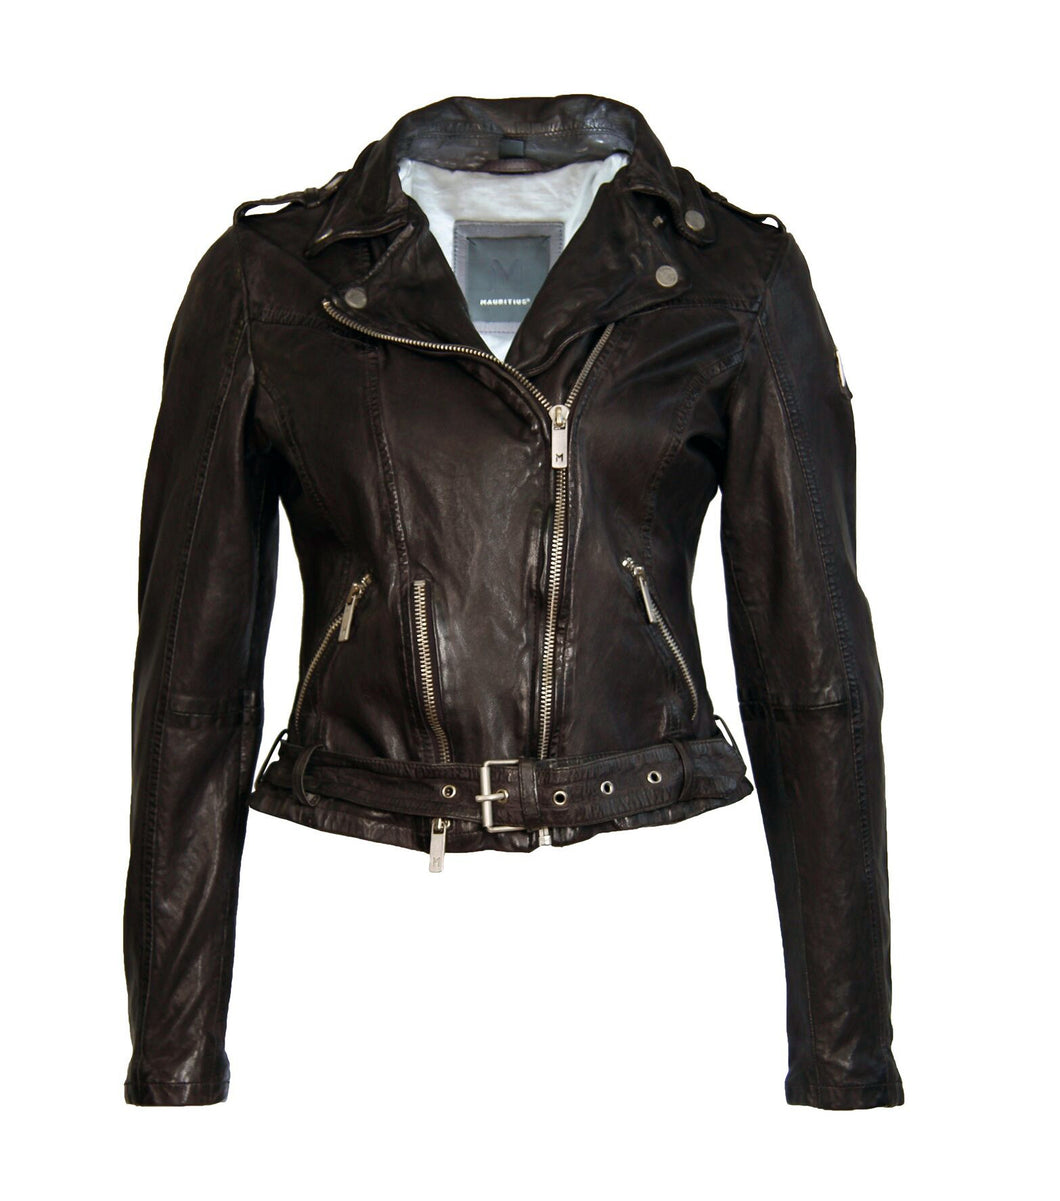 Wild Leather Jacket - Graphite